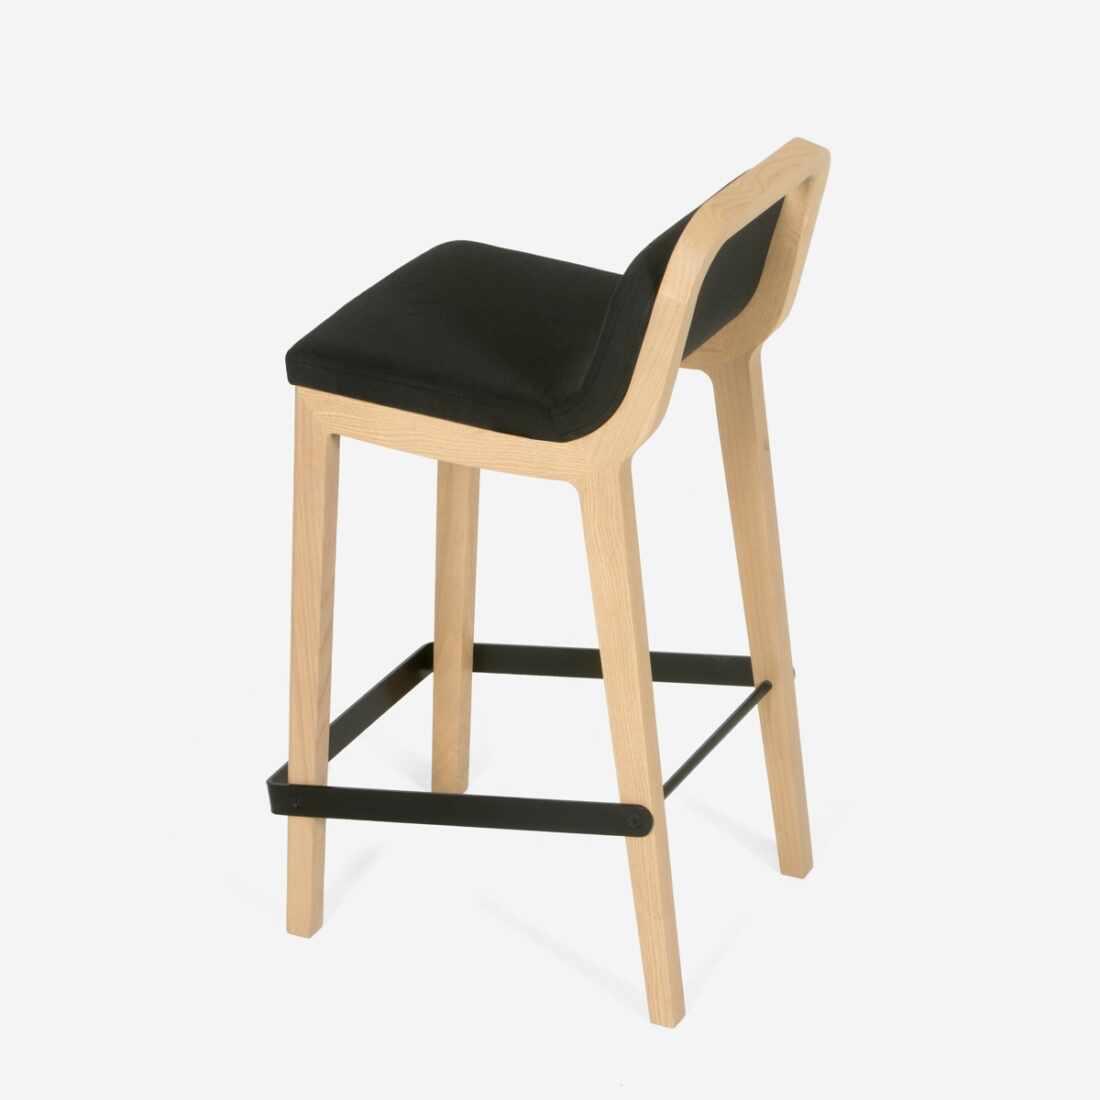 irida-stools-4